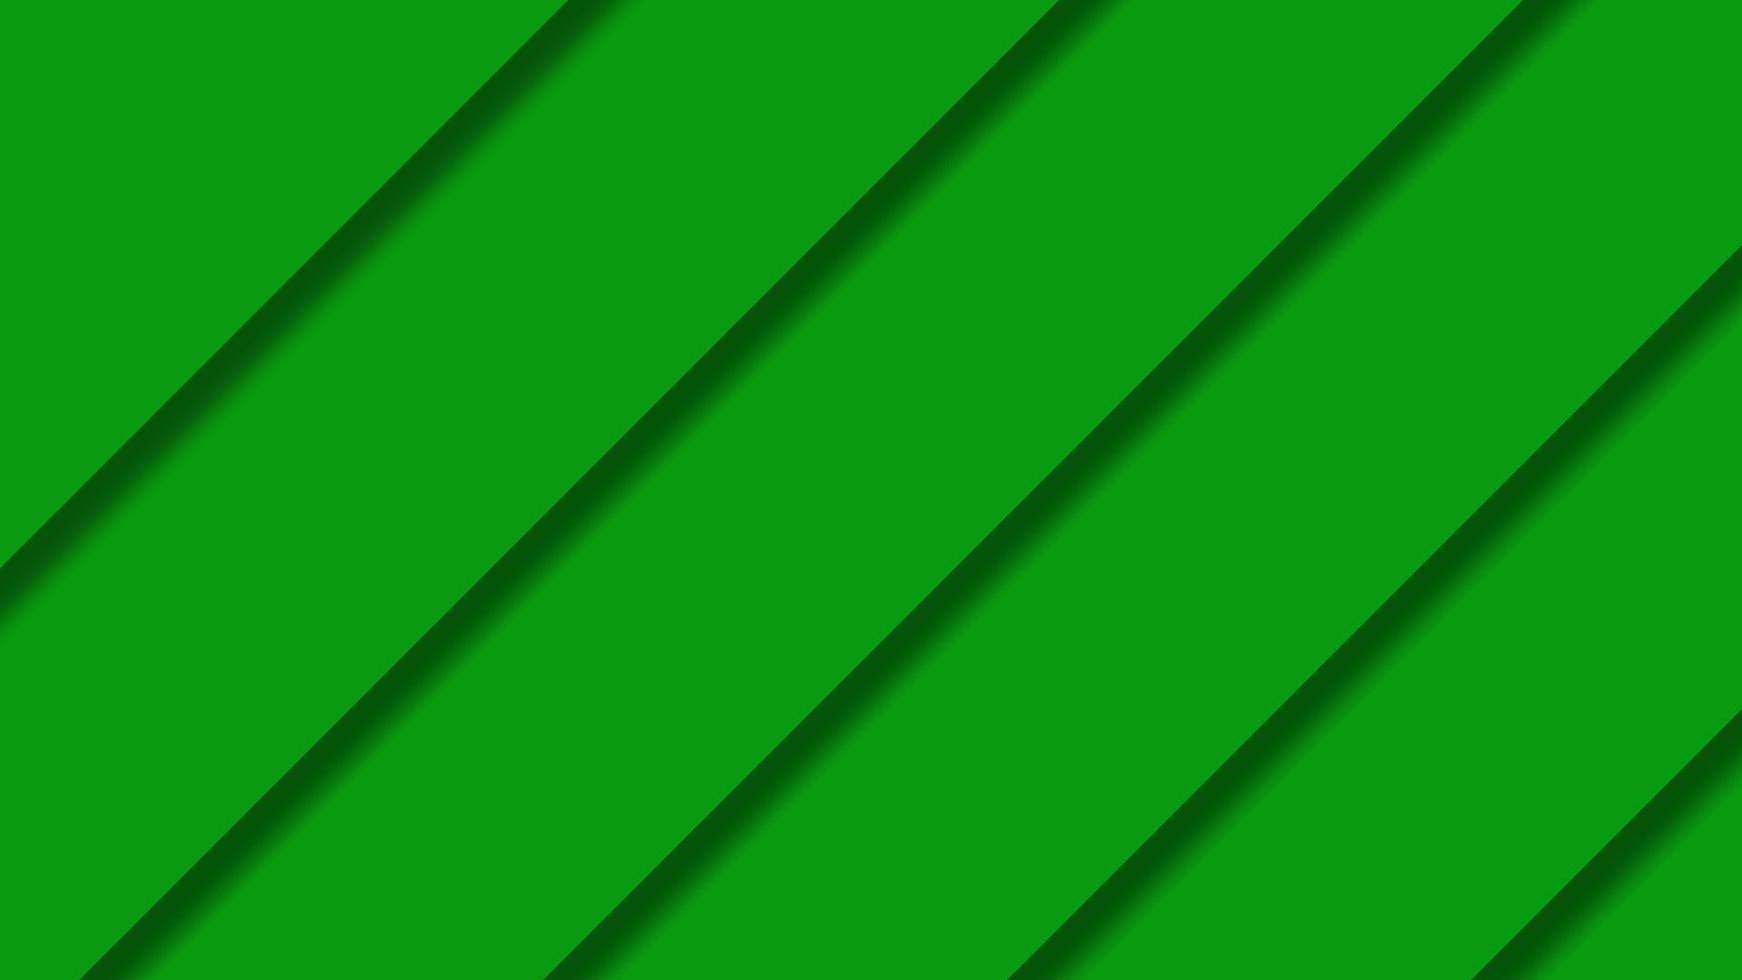 grön abstrakt geometrisk former bakgrund. dynamisk tävling. vektor illustration. eps 10.